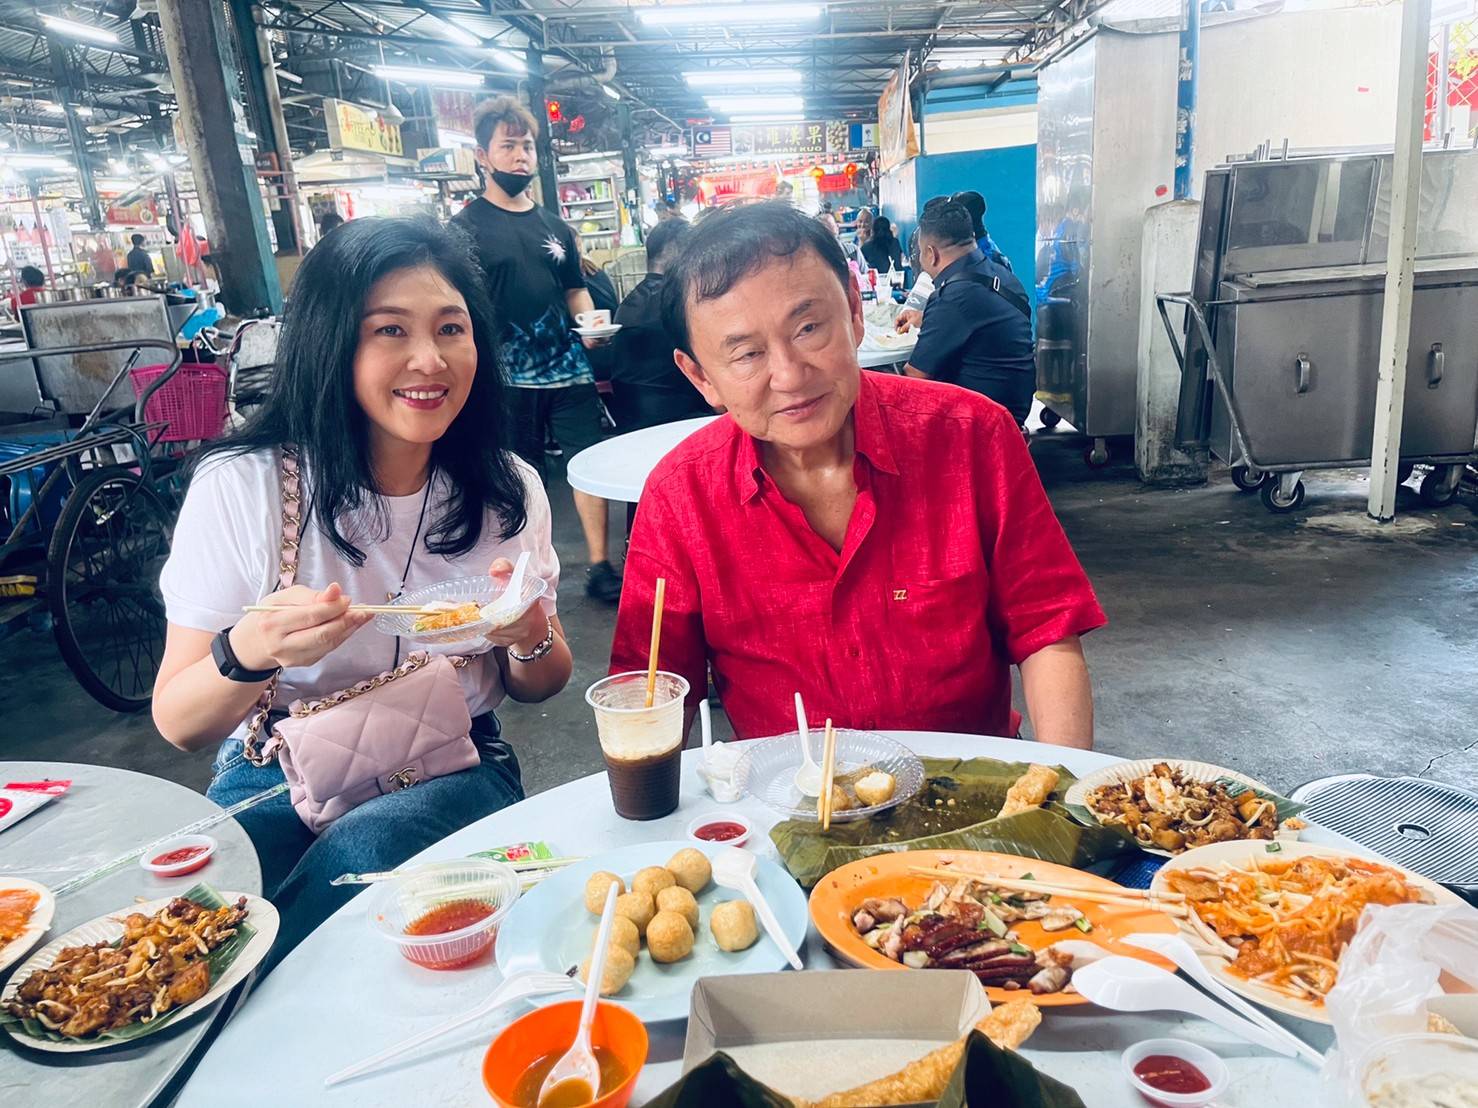 Both siblings managed to enjoy a spot of Penang's famous street food. Image credit: Yingluck Shinawatra